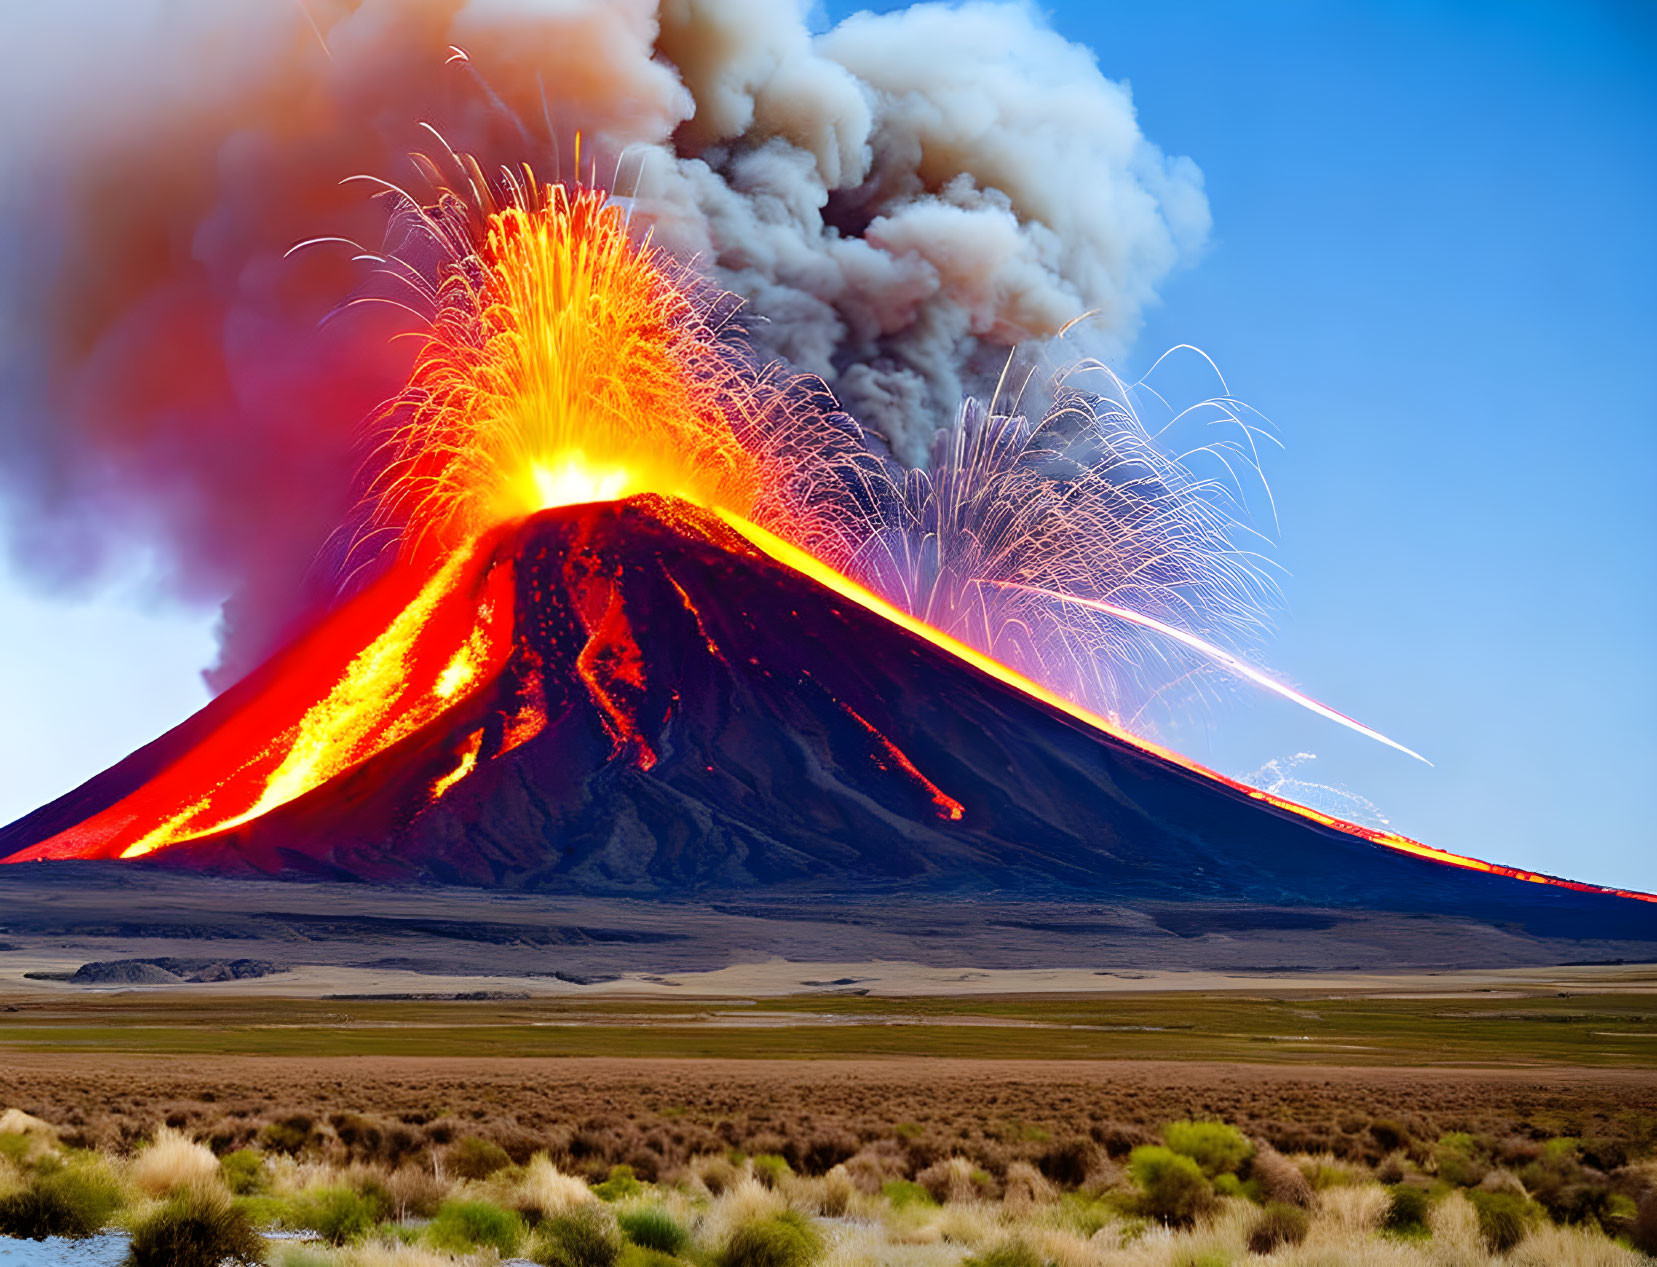 Volcano eruption spews fiery lava and ash under blue sky